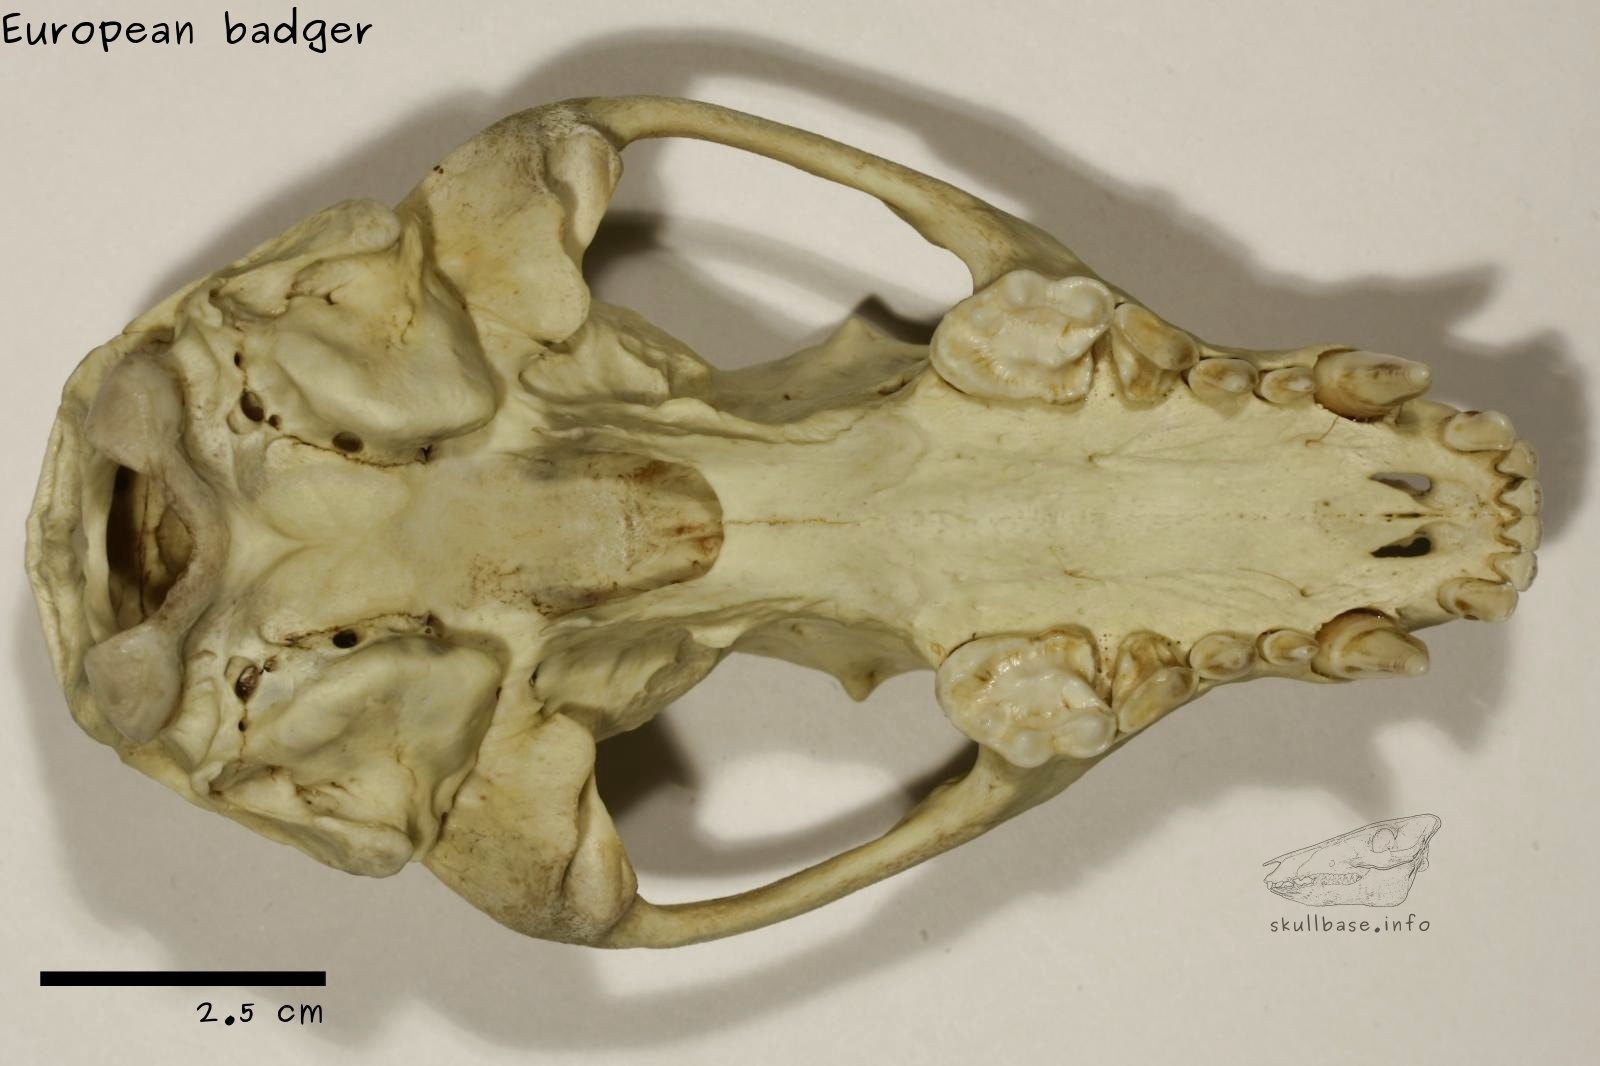 European badger (Meles meles) ventral view